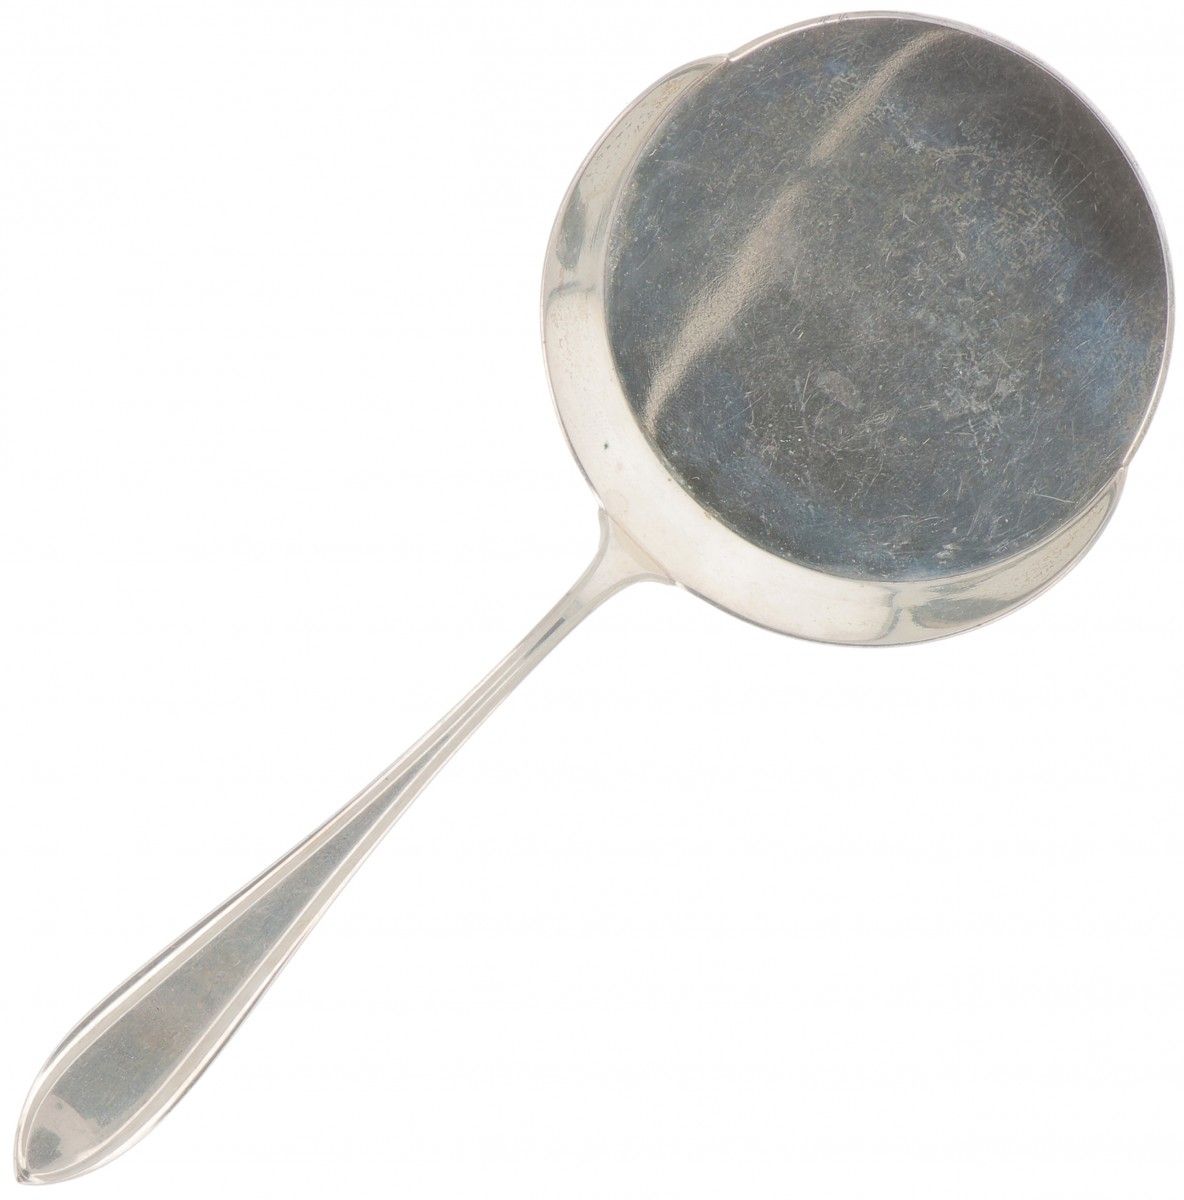 Fried egg scoop "Dutch point fillet" silver. Made in a "Dutch point fillet" larg&hellip;